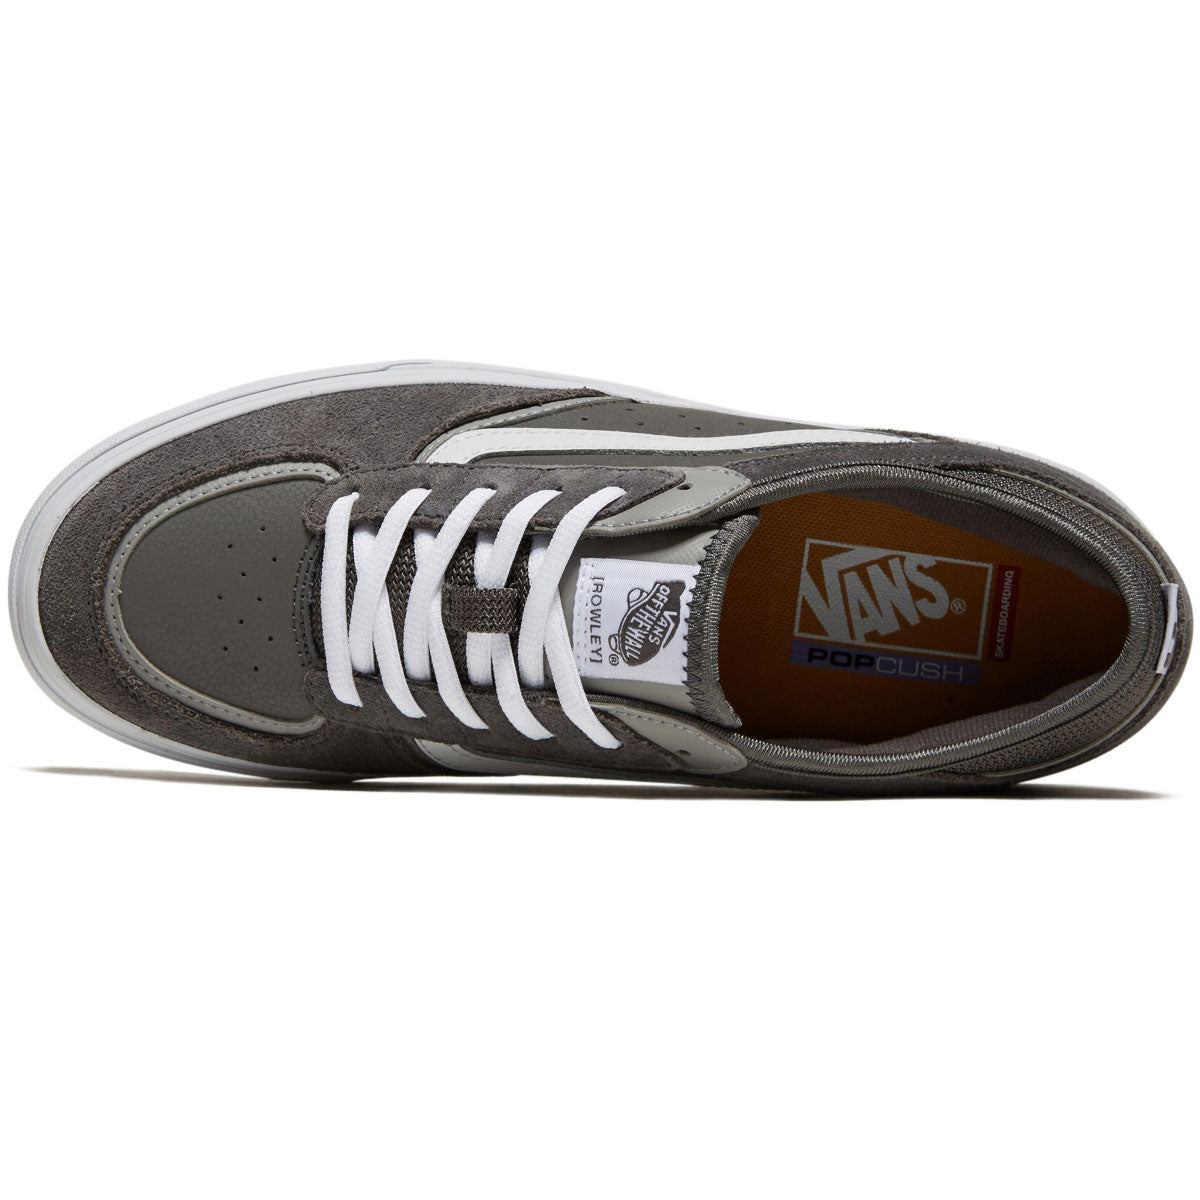 Vans Skate Rowley Shoes - Grey/White image 3